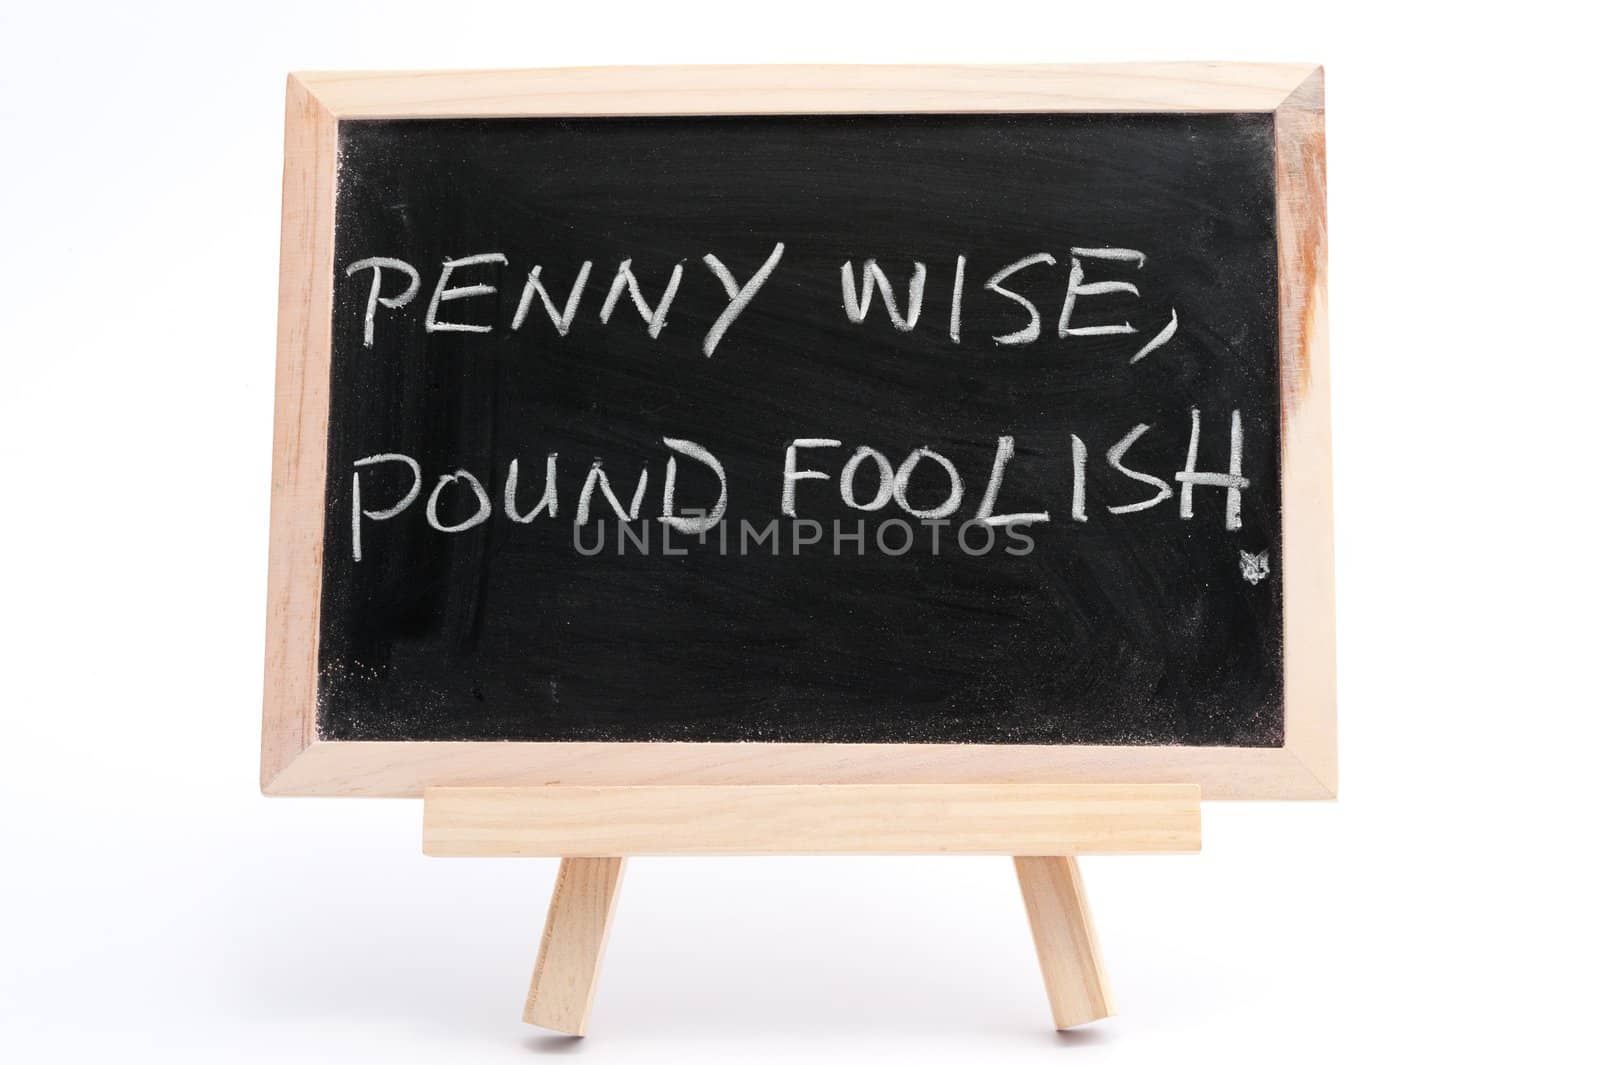 "Penny wise, pound foolish" saying written on blackboard over white background